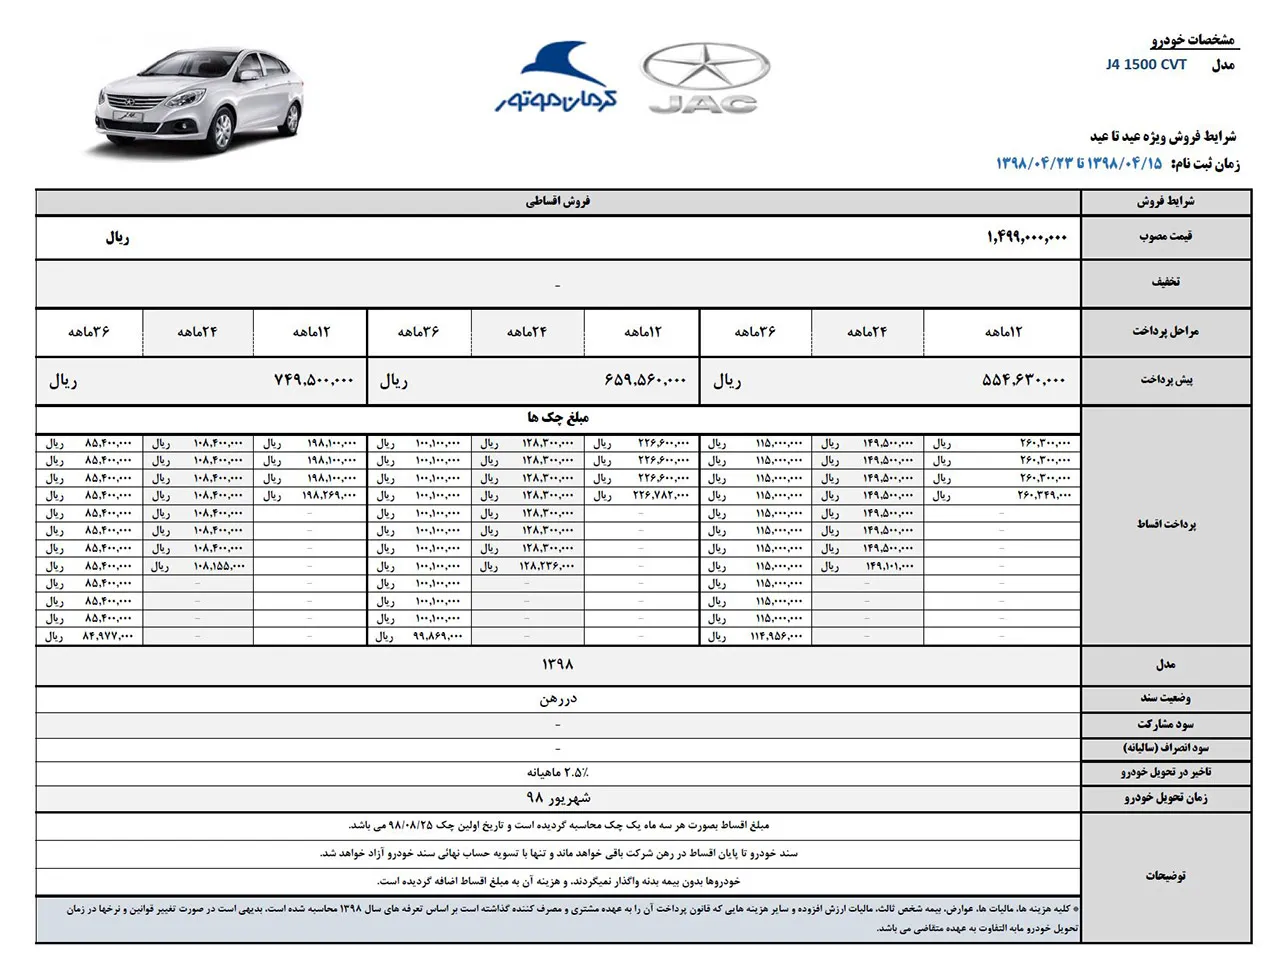 AutomobileFa Jac J4 price list 13tir98